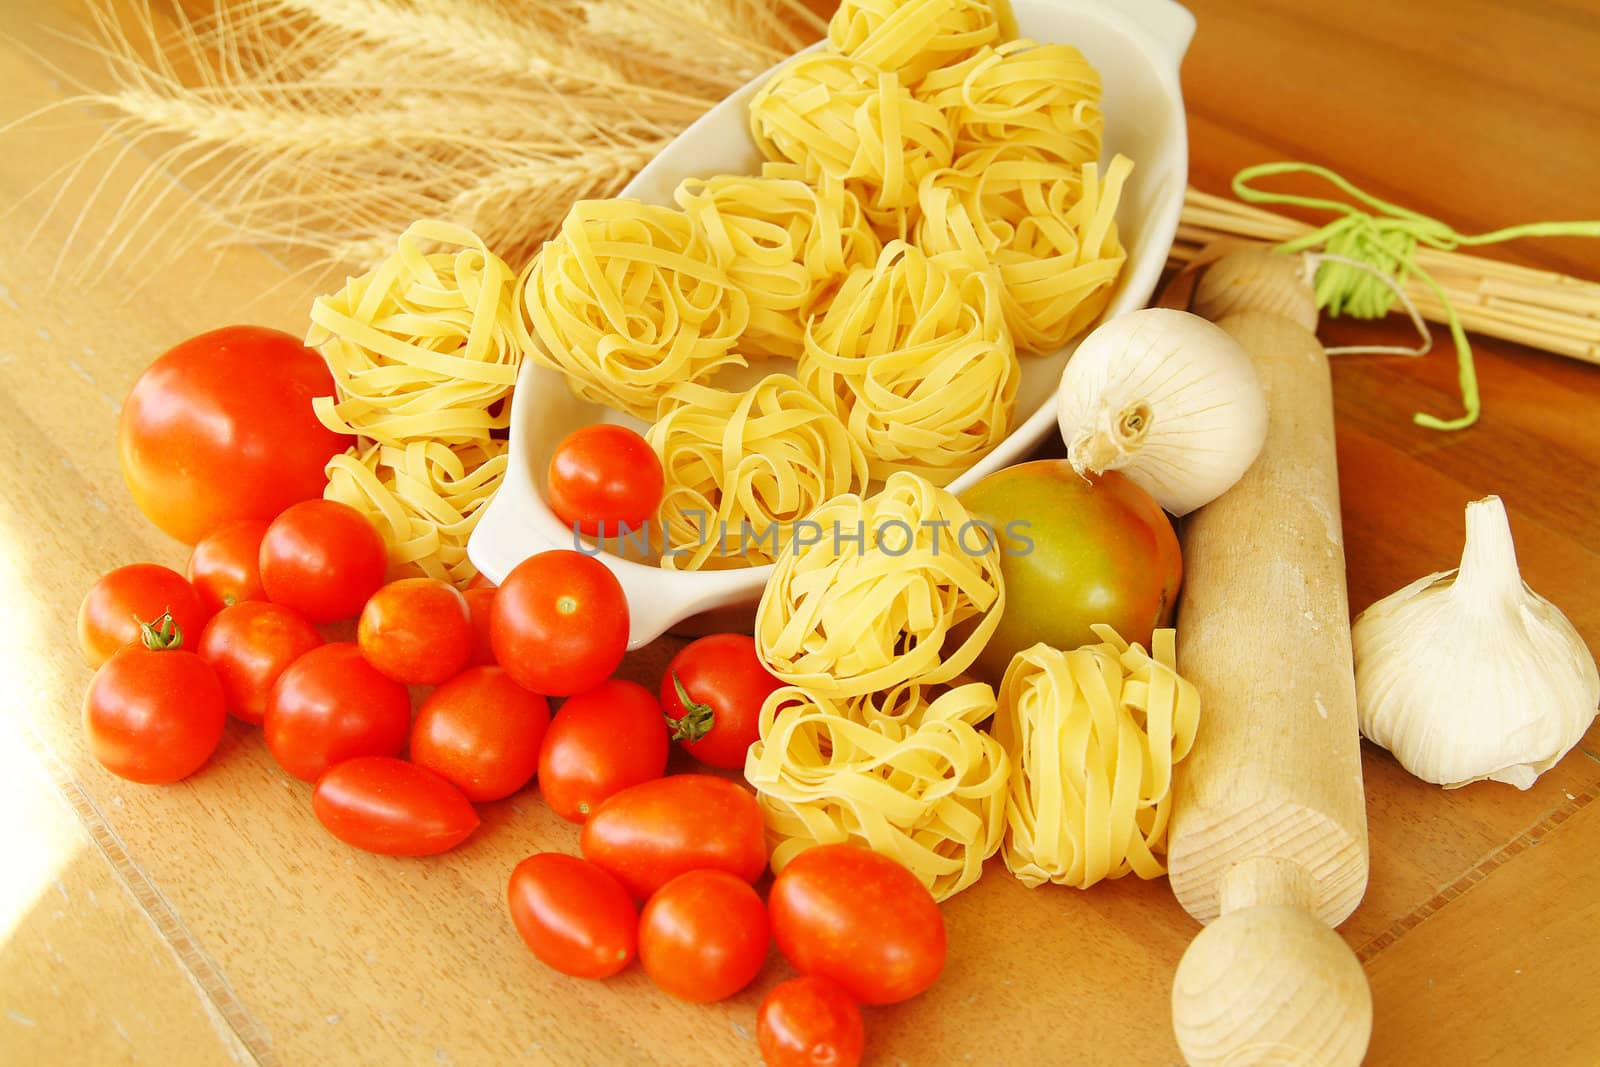 Pasta, garlic and tomatoes by silvie19